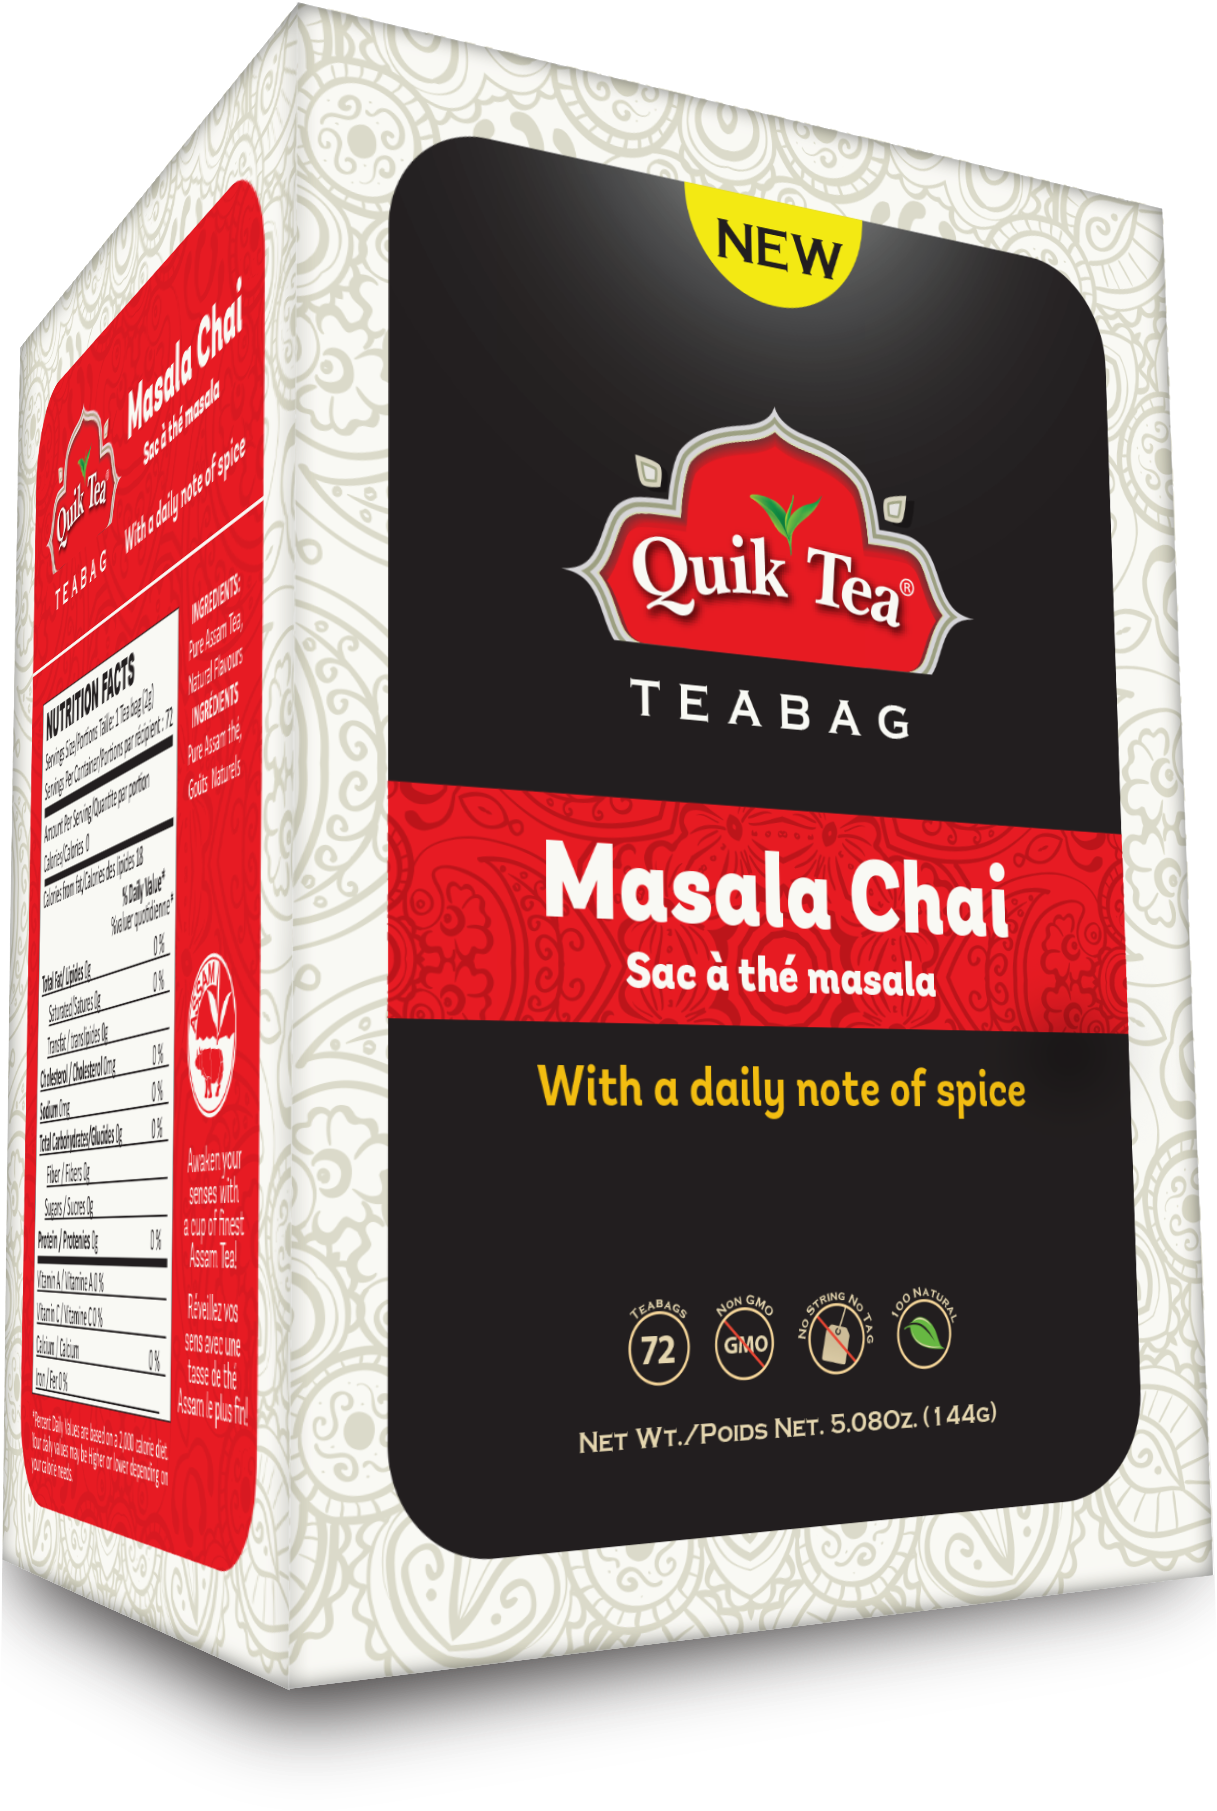 A Box Of Masala Chai Tea